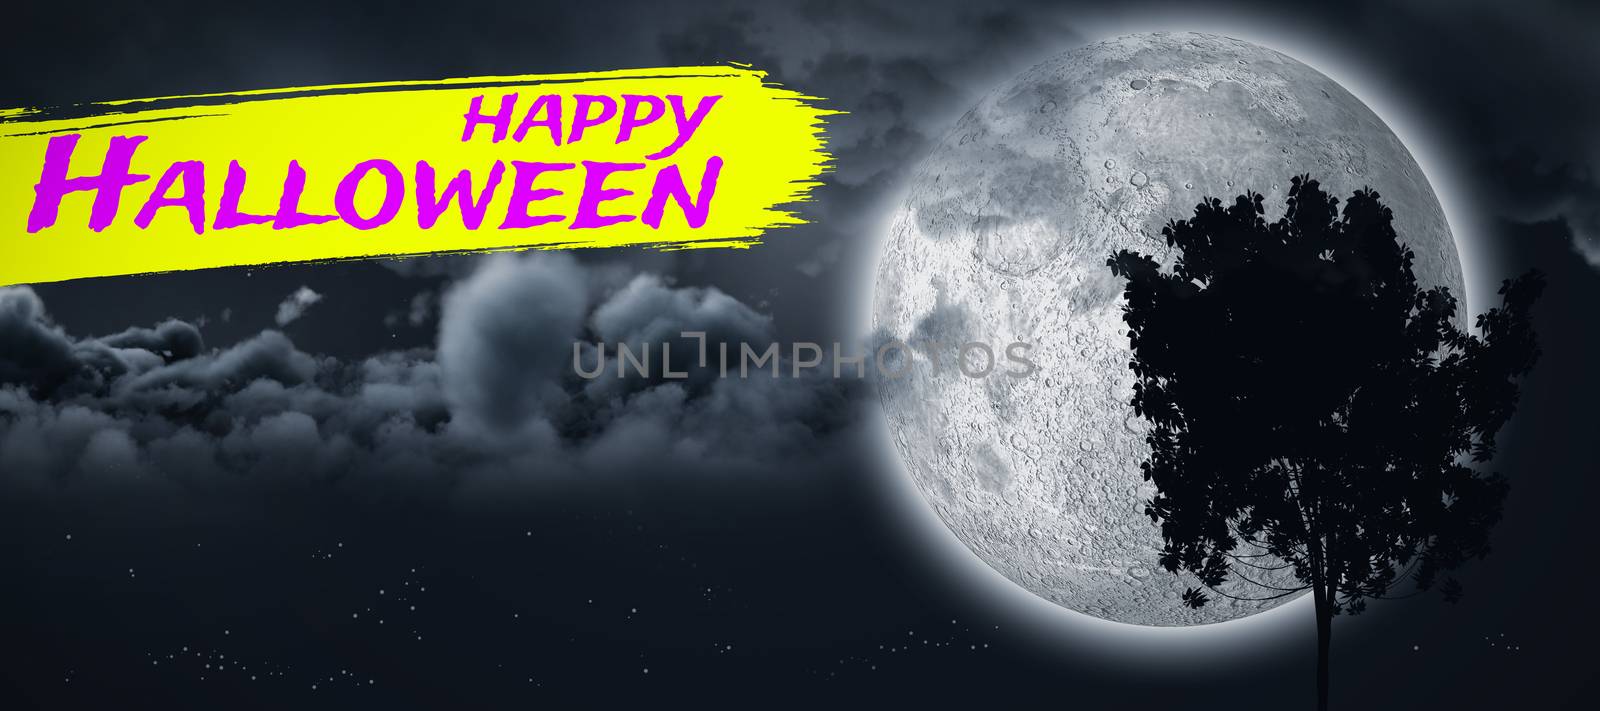 Composite image of digital image of happy halloween text by Wavebreakmedia